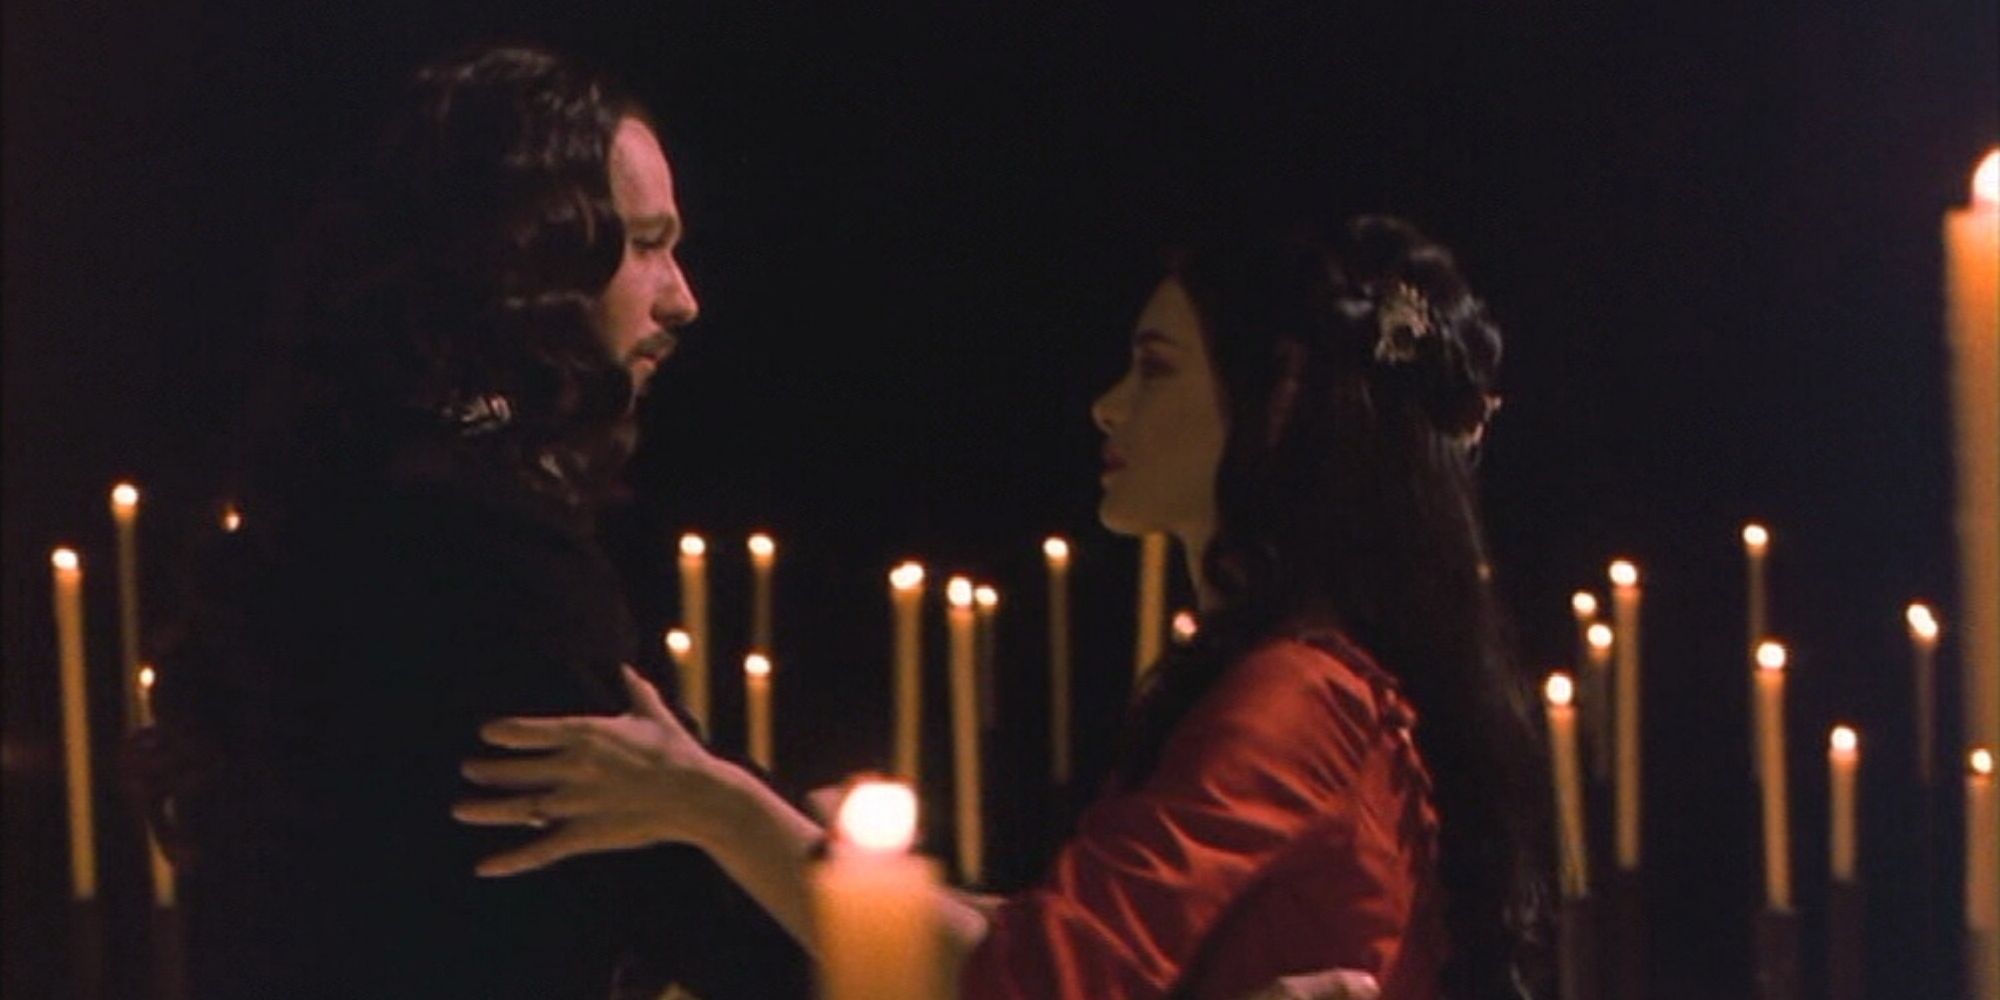 Dracula dancing with Mina Harker